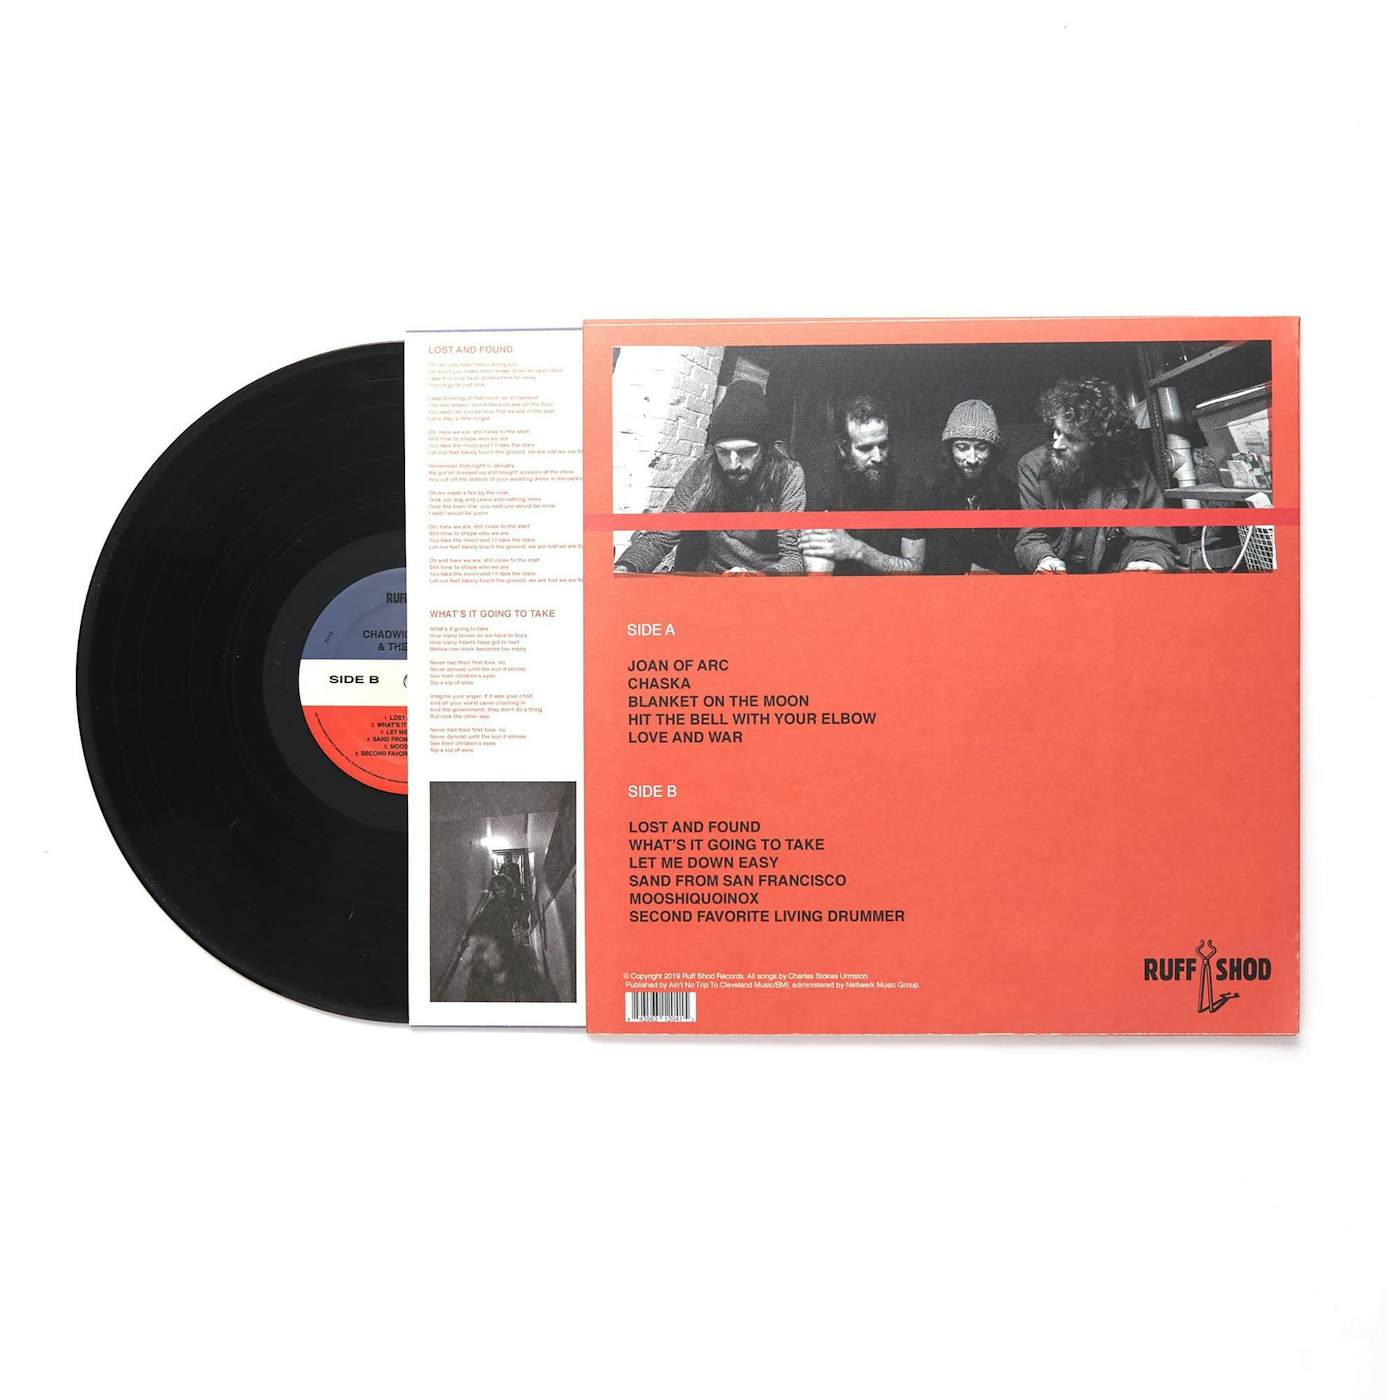 DISPATCH Chadwick Stokes & The Pintos 'Self-Titled' 12" Vinyl LP